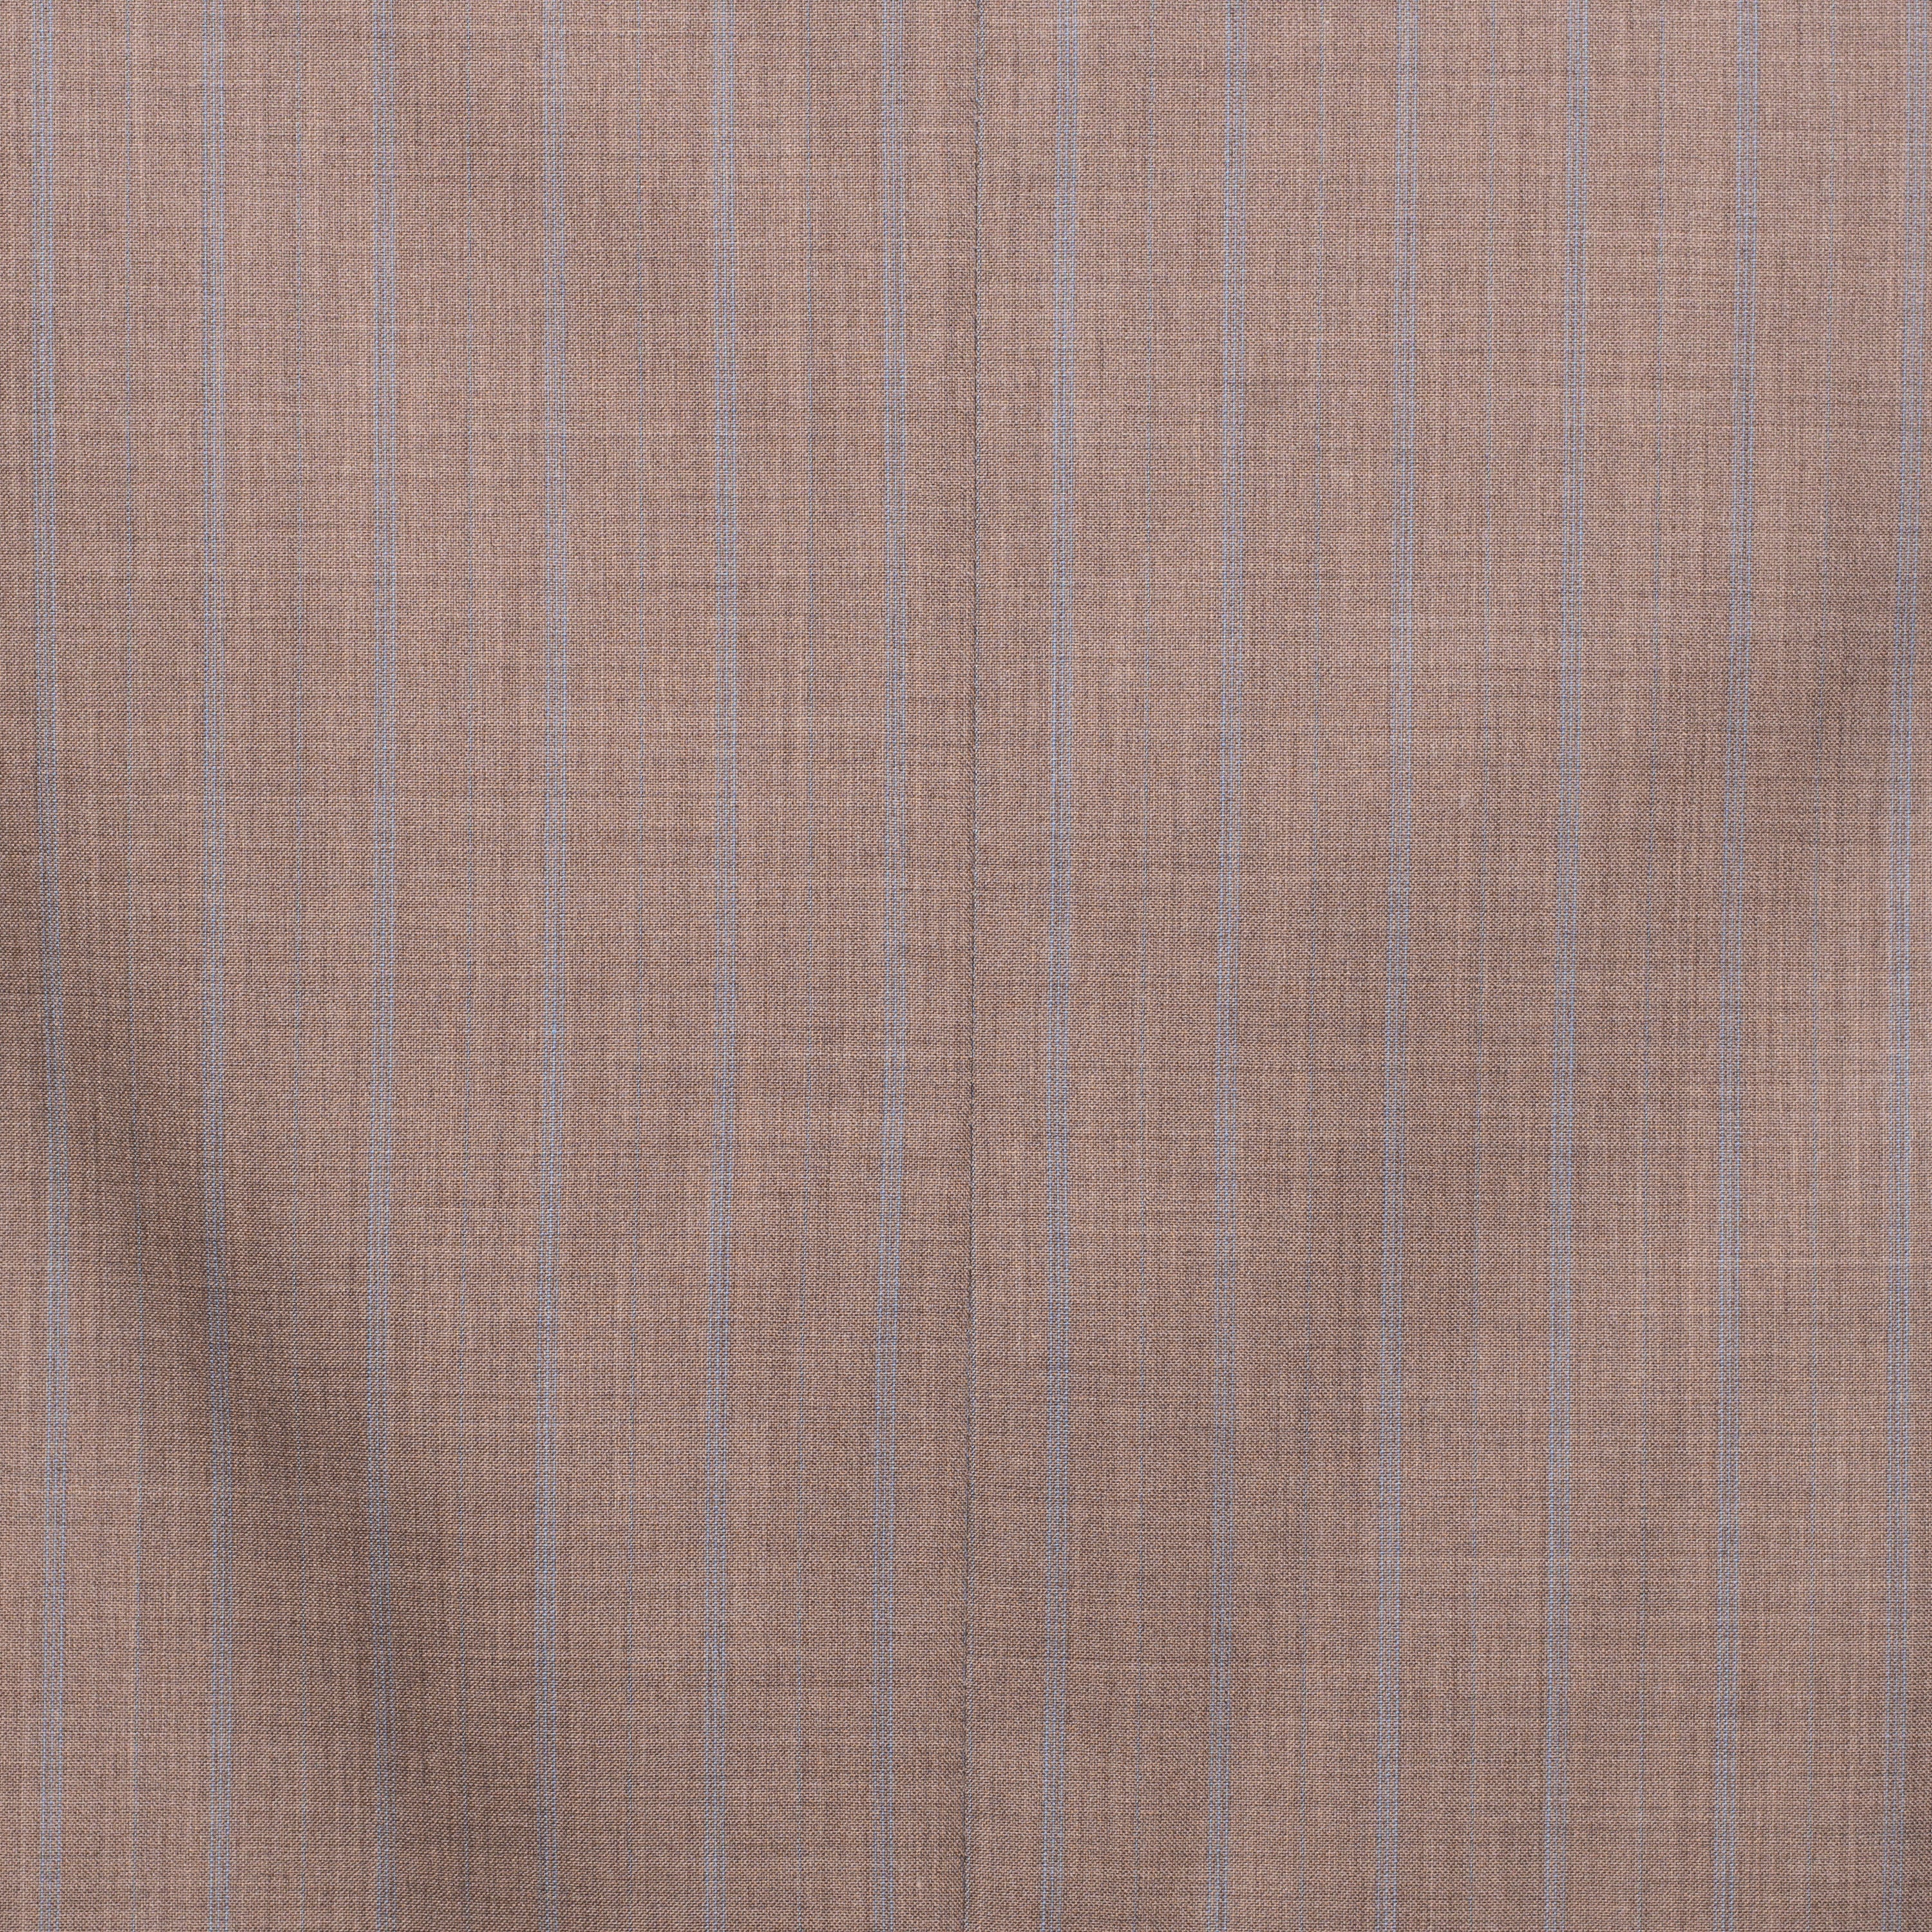 SARTORIA CASTANGIA Taupe Gray Striped Wool Super 120's Suit EU 50 NEW US 40 CASTANGIA